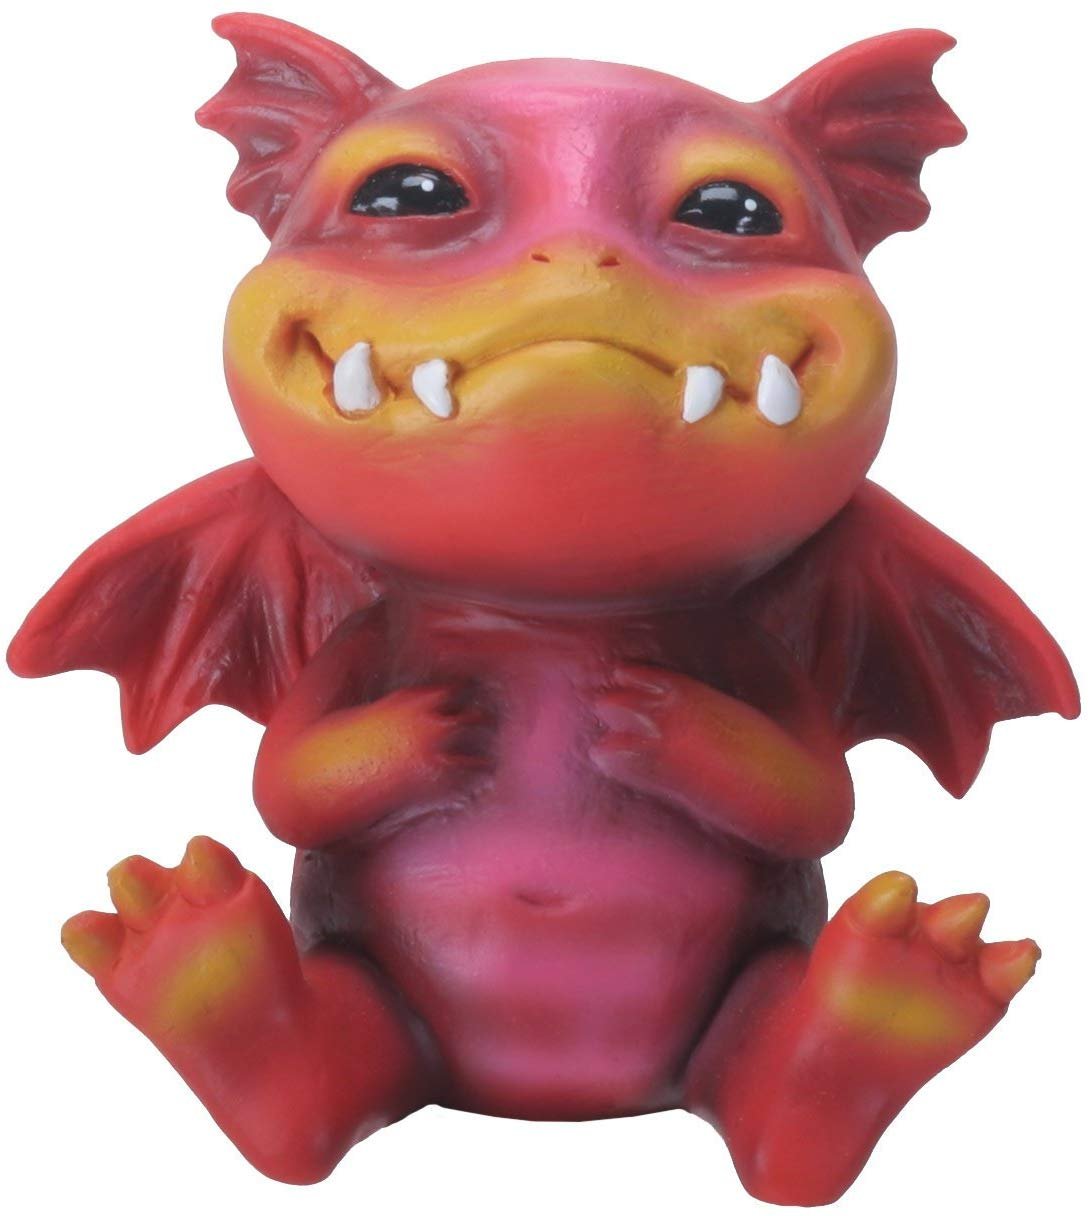 2.5 Inch Baby Dragon Bo Statue Figurine, Red and Orange Colored